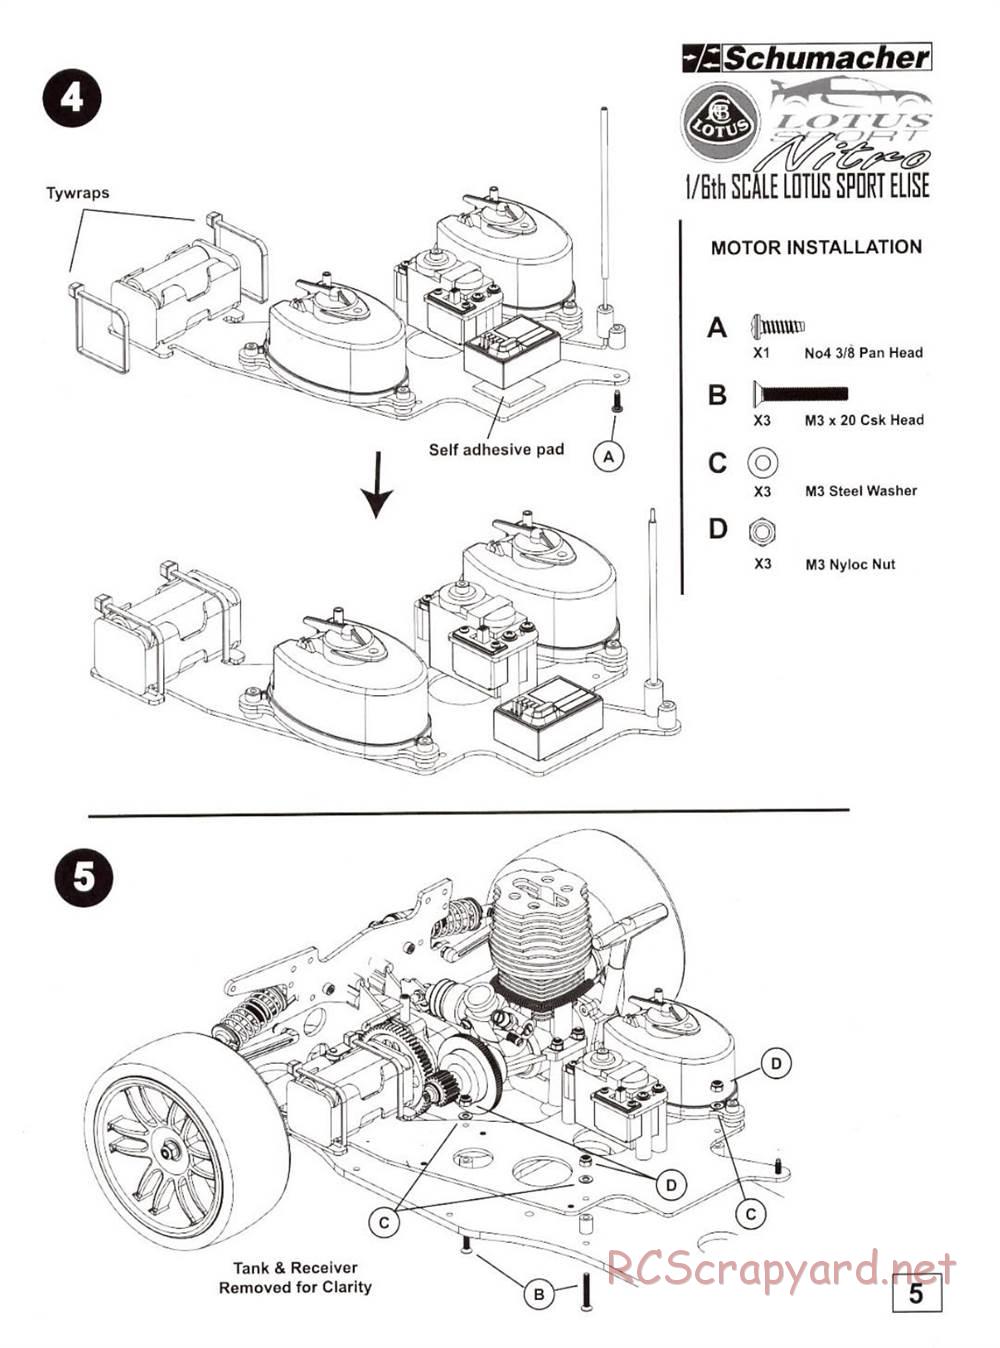 Schumacher - Big 6 Lotus Nitro - Manual - Page 22